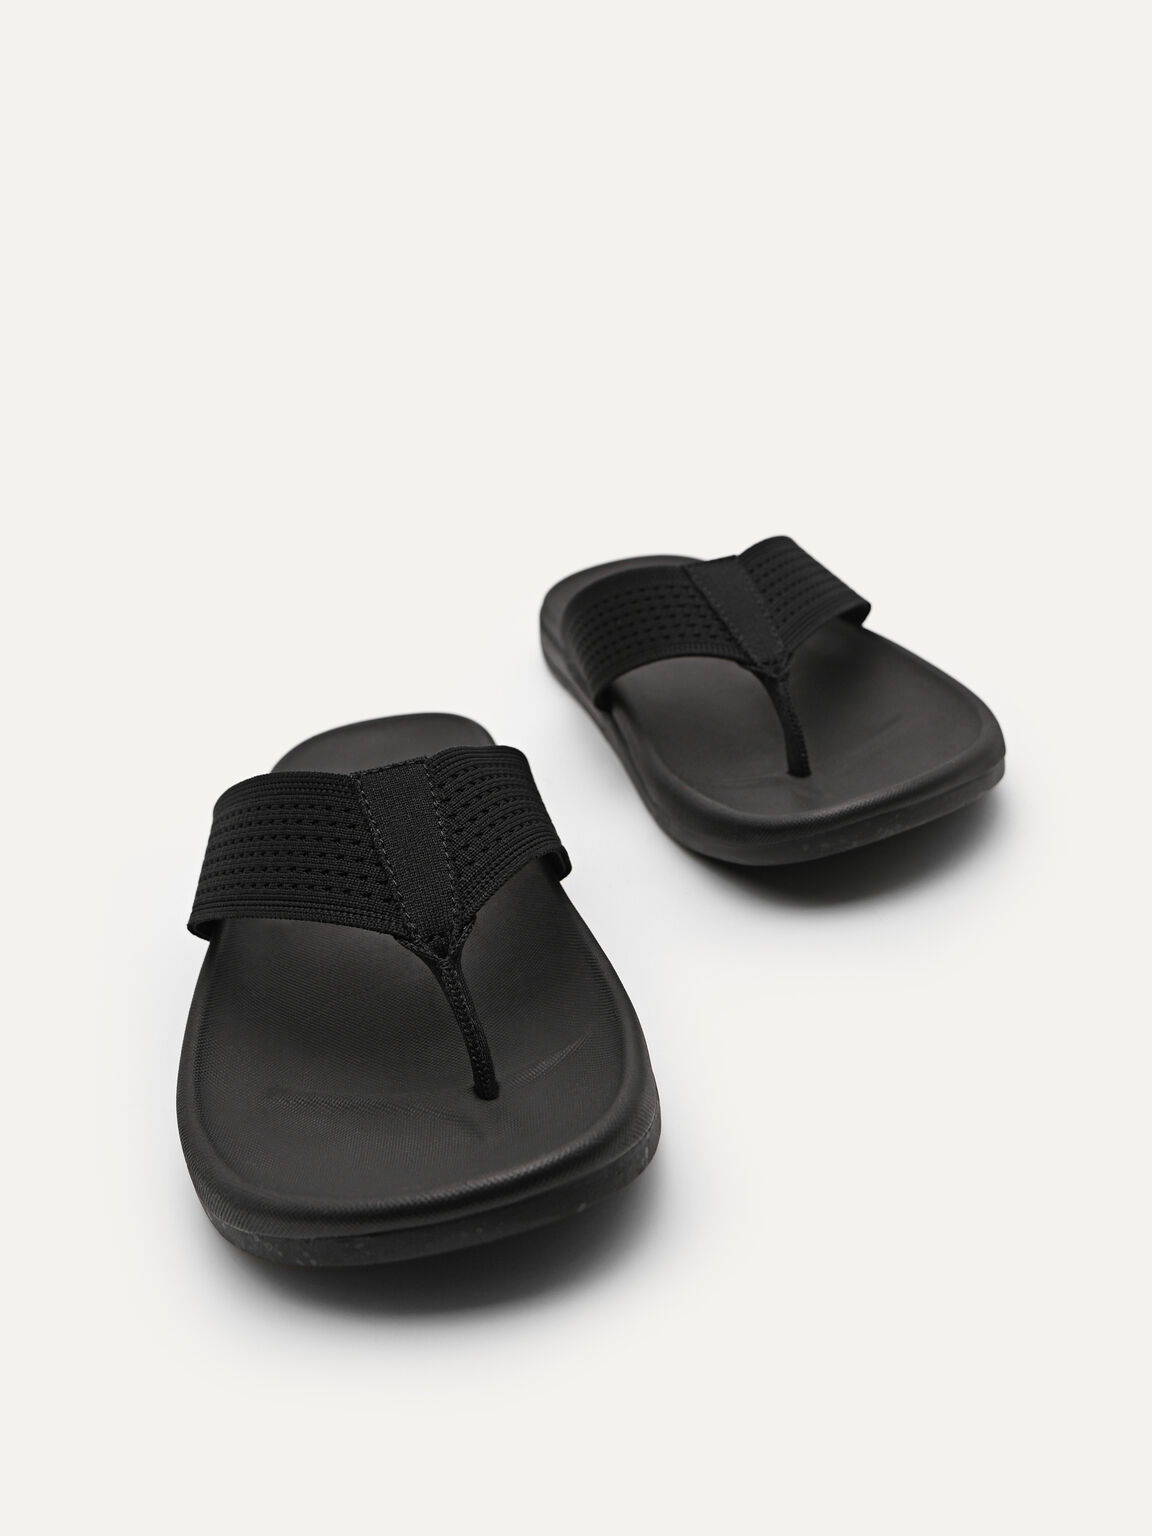 Knitted Lightweight Thong Sandals, Black